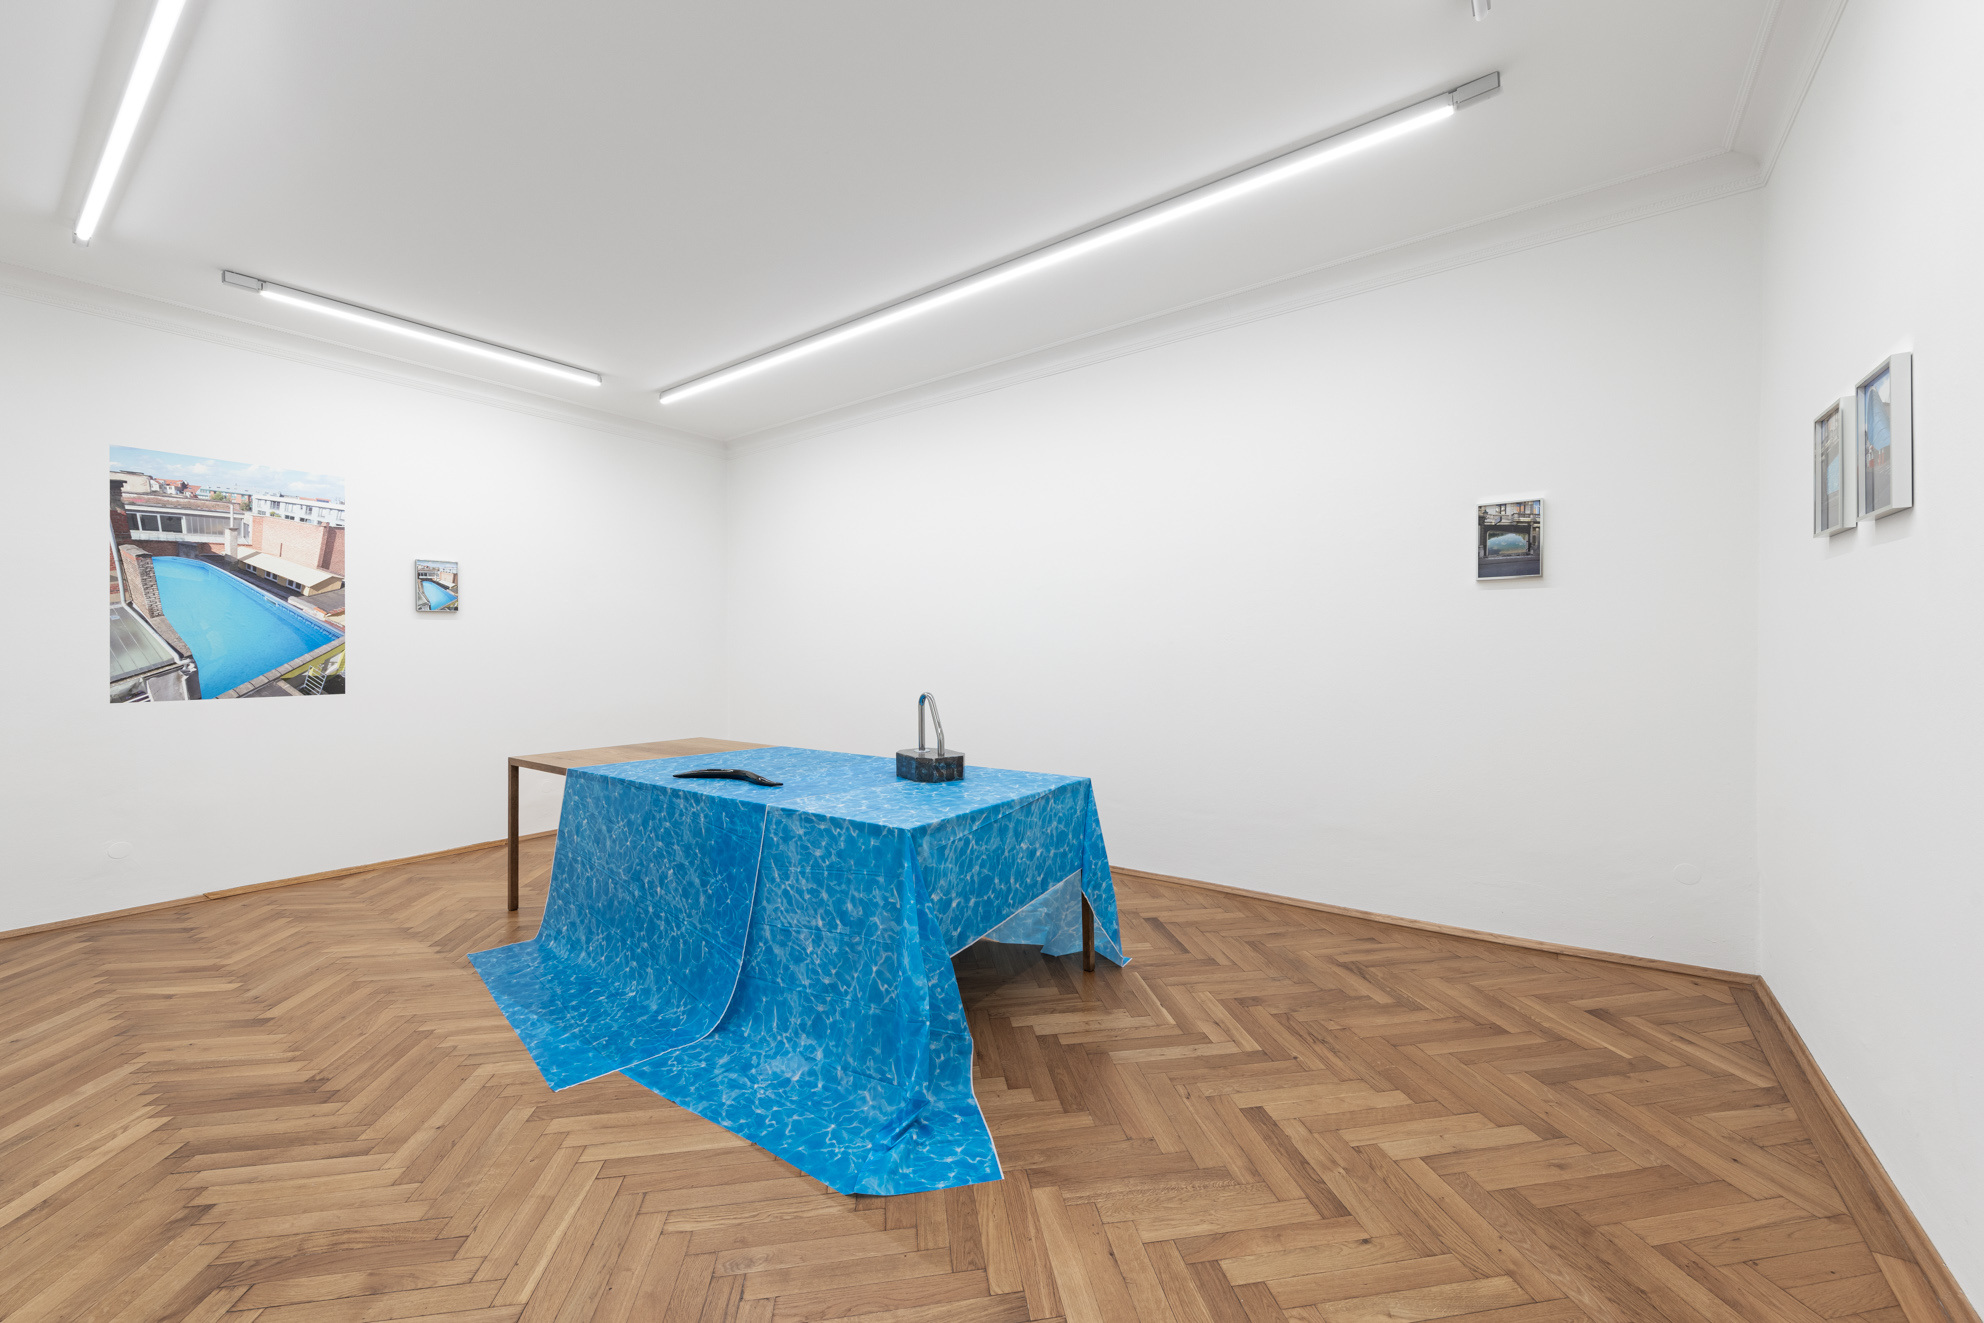 Installation view, Judith Adelmann, "take me to the river", Britta Rettberg Munich